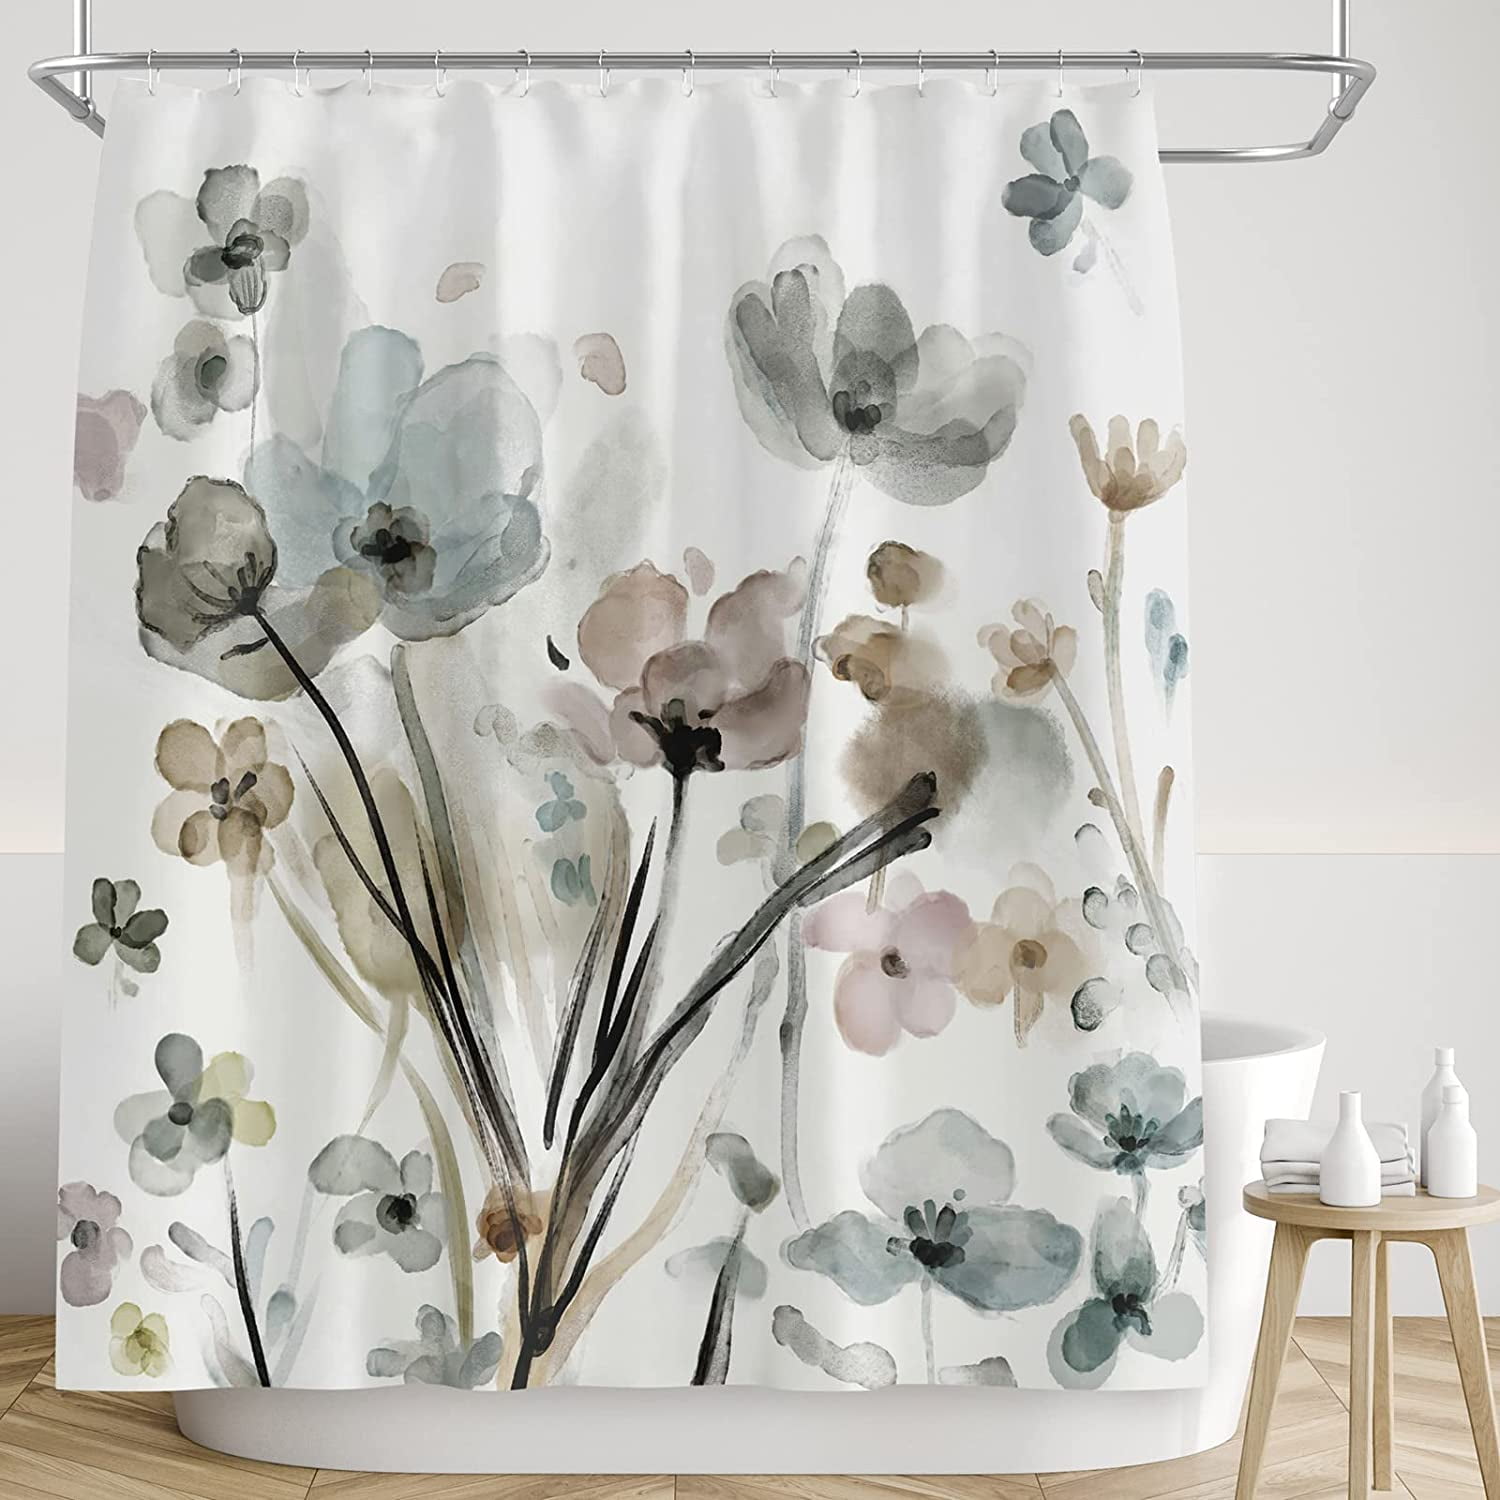 72x72'' The World Map Shower Curtain Liner Bathroom Waterproof Fabric & 12 Hooks 